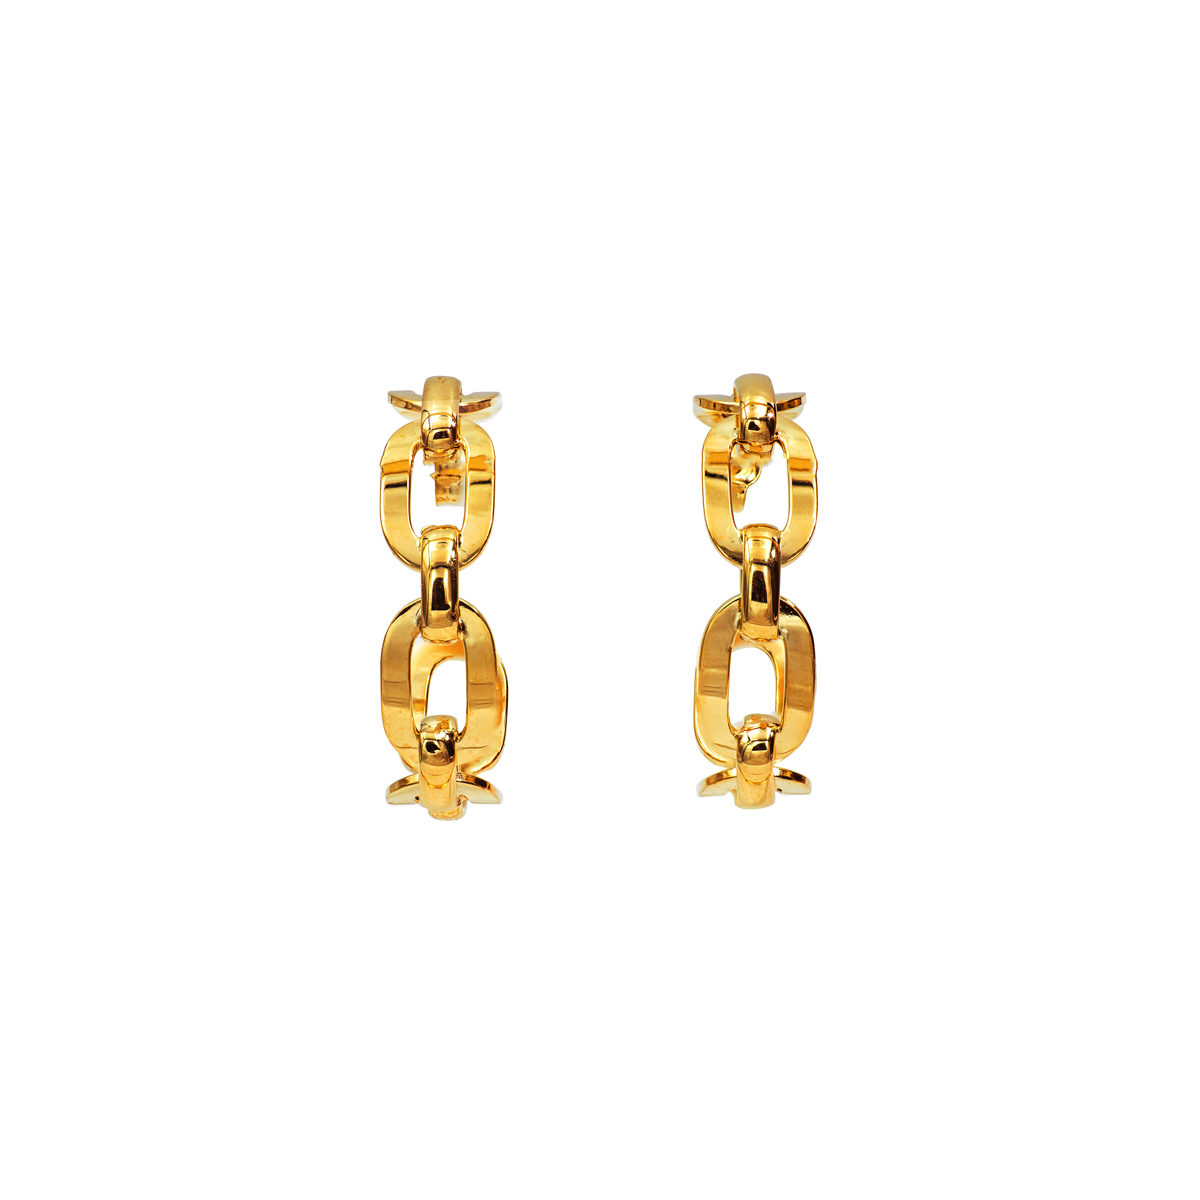 Chain Link C Hoop Earrings in 14k Yellow Gold